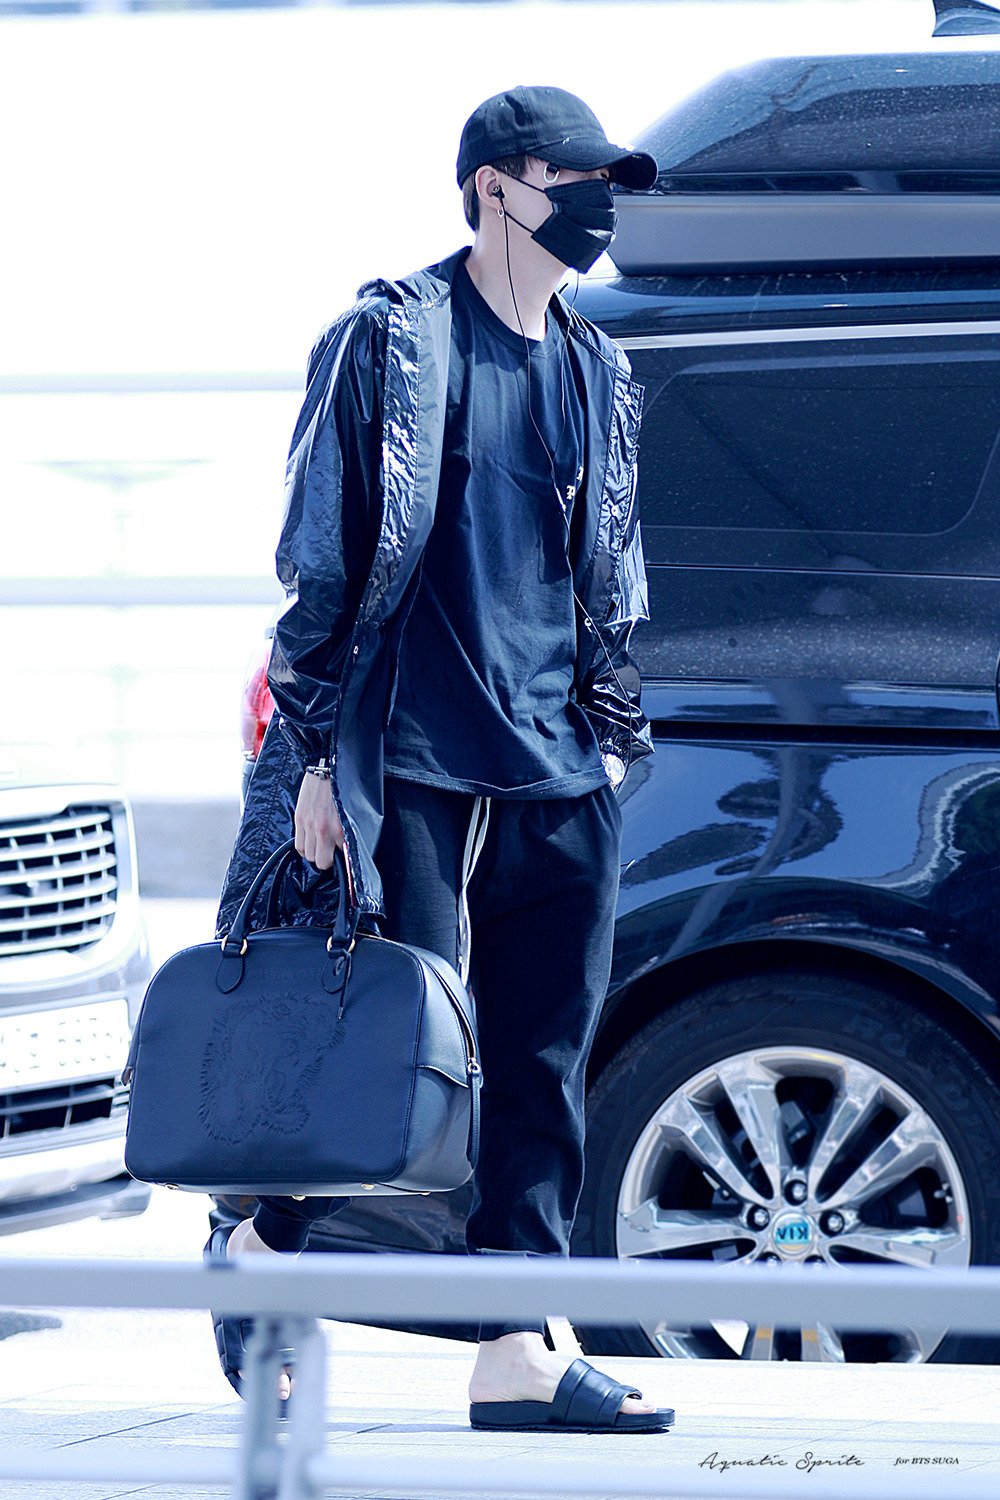 suga pics on Twitter: yoongi's all black airport fashion   / X